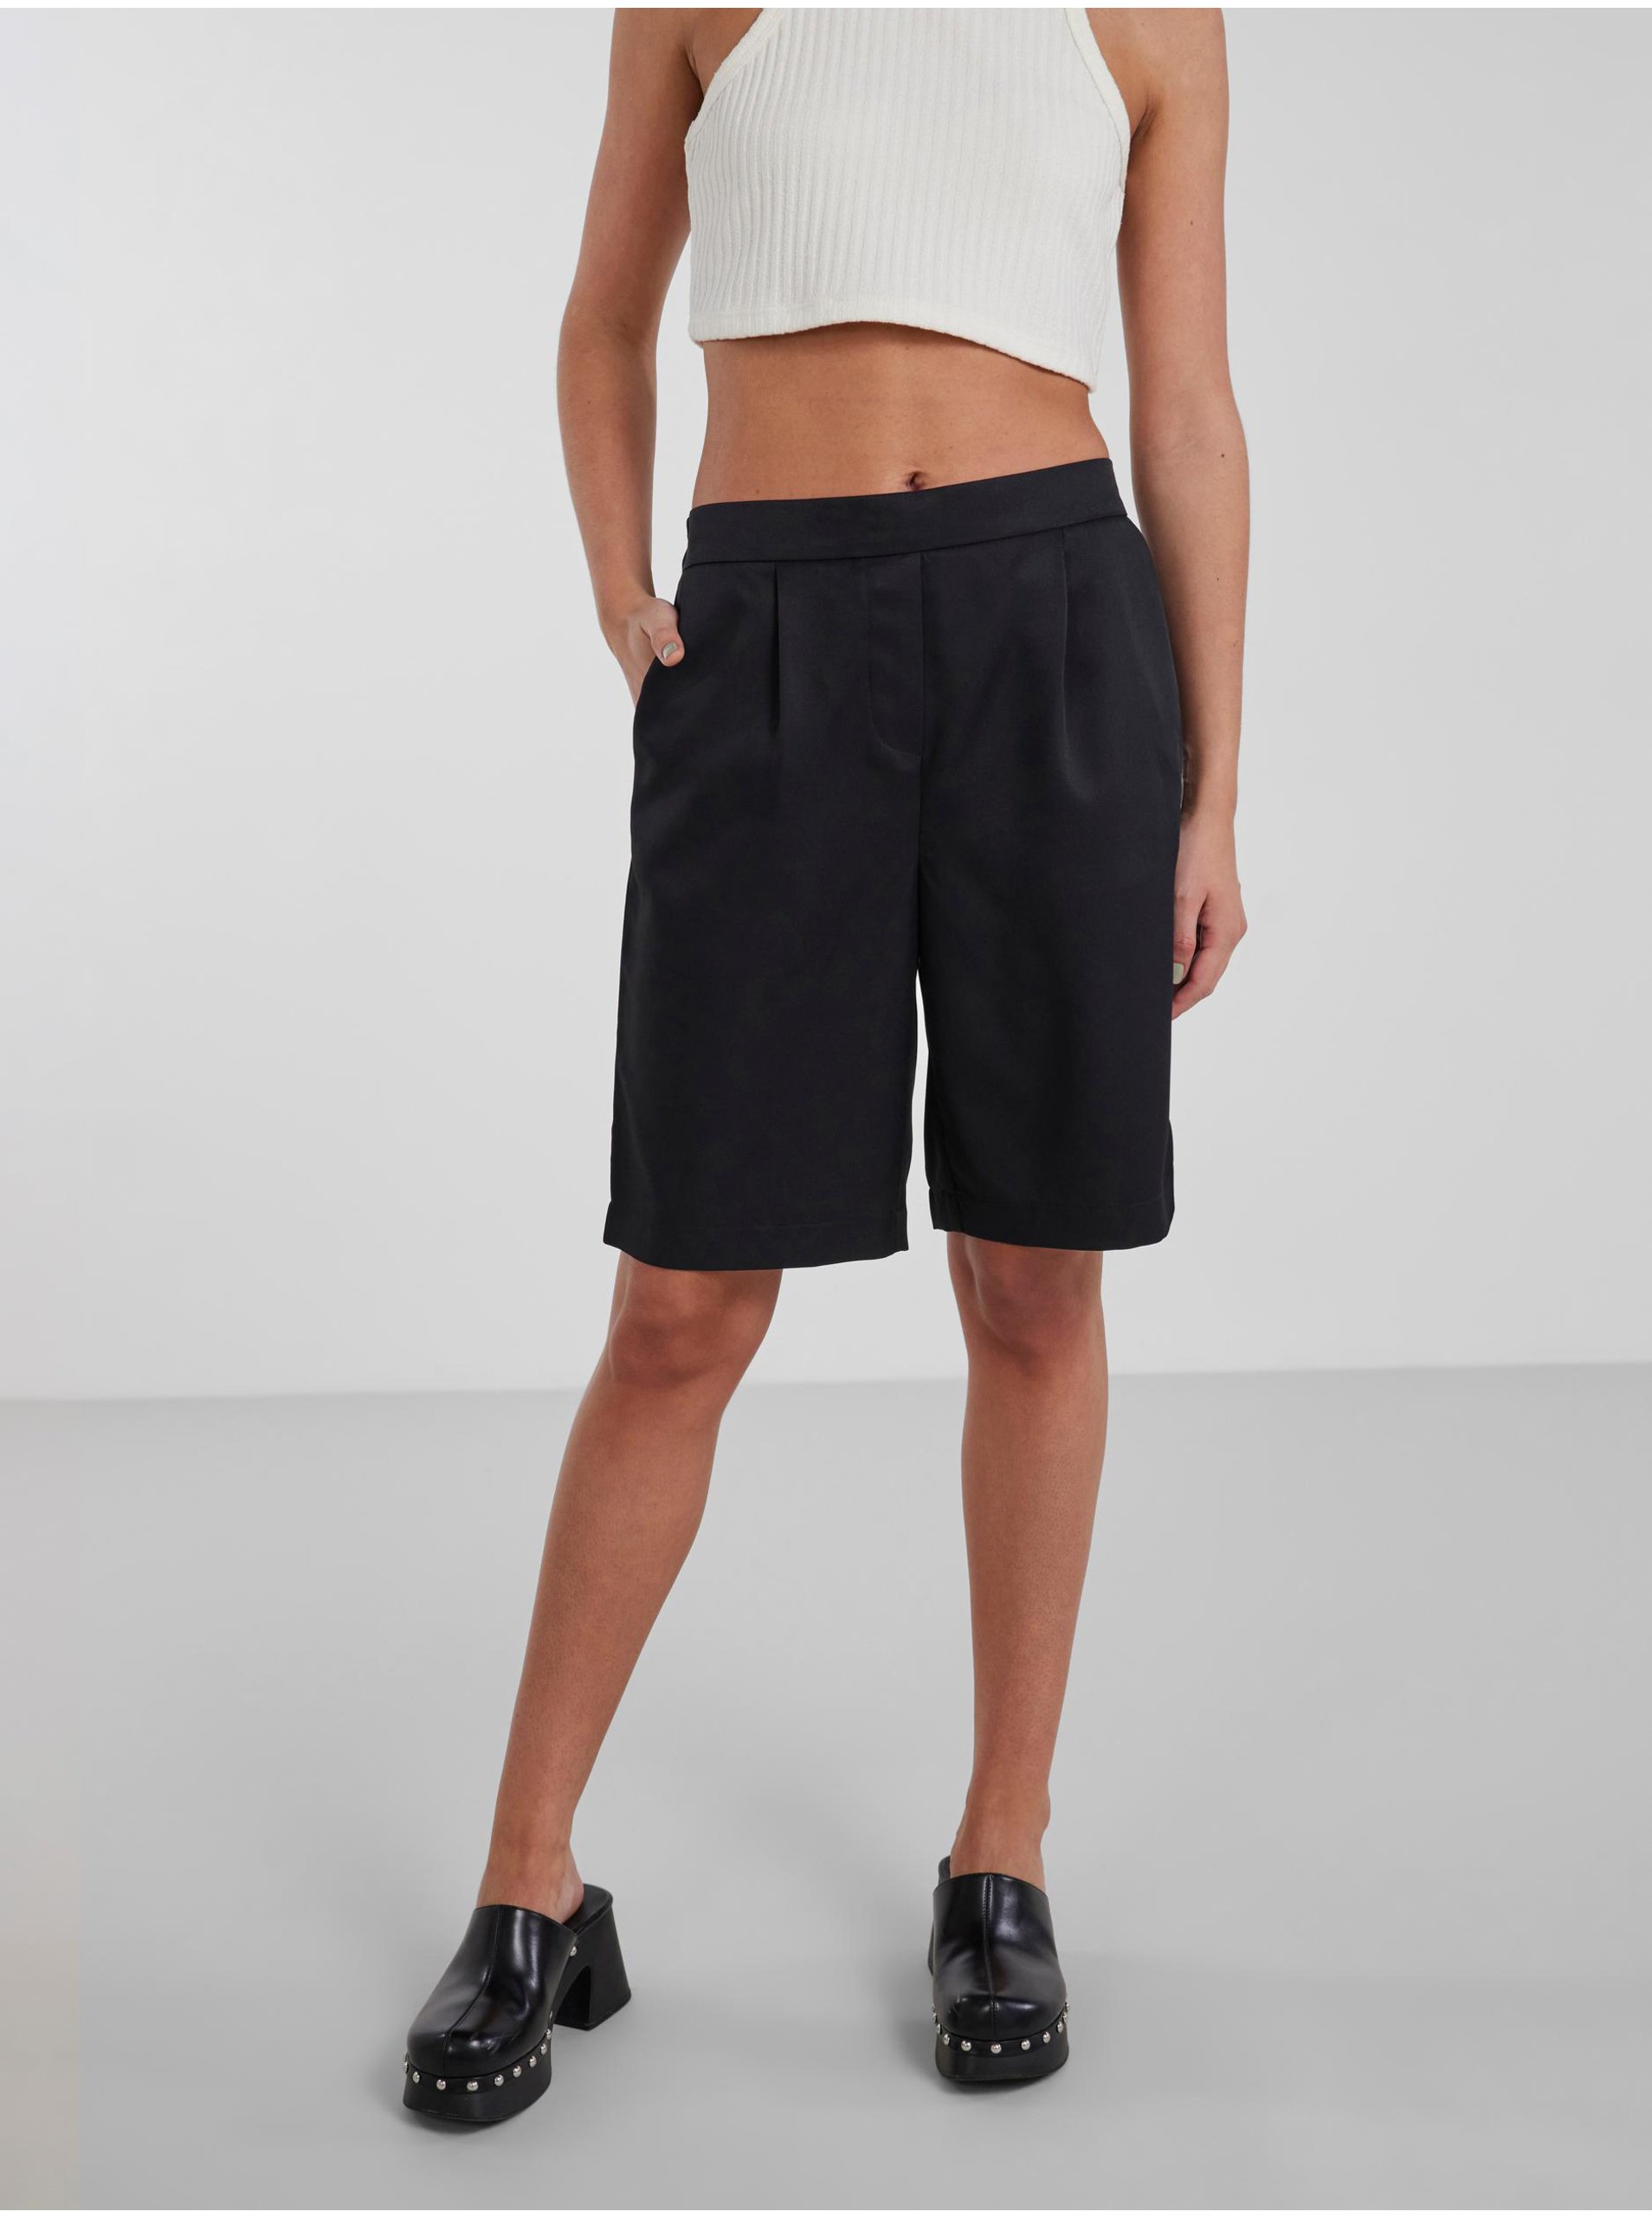 Women's Black Shorts Pieces Tally - Women's